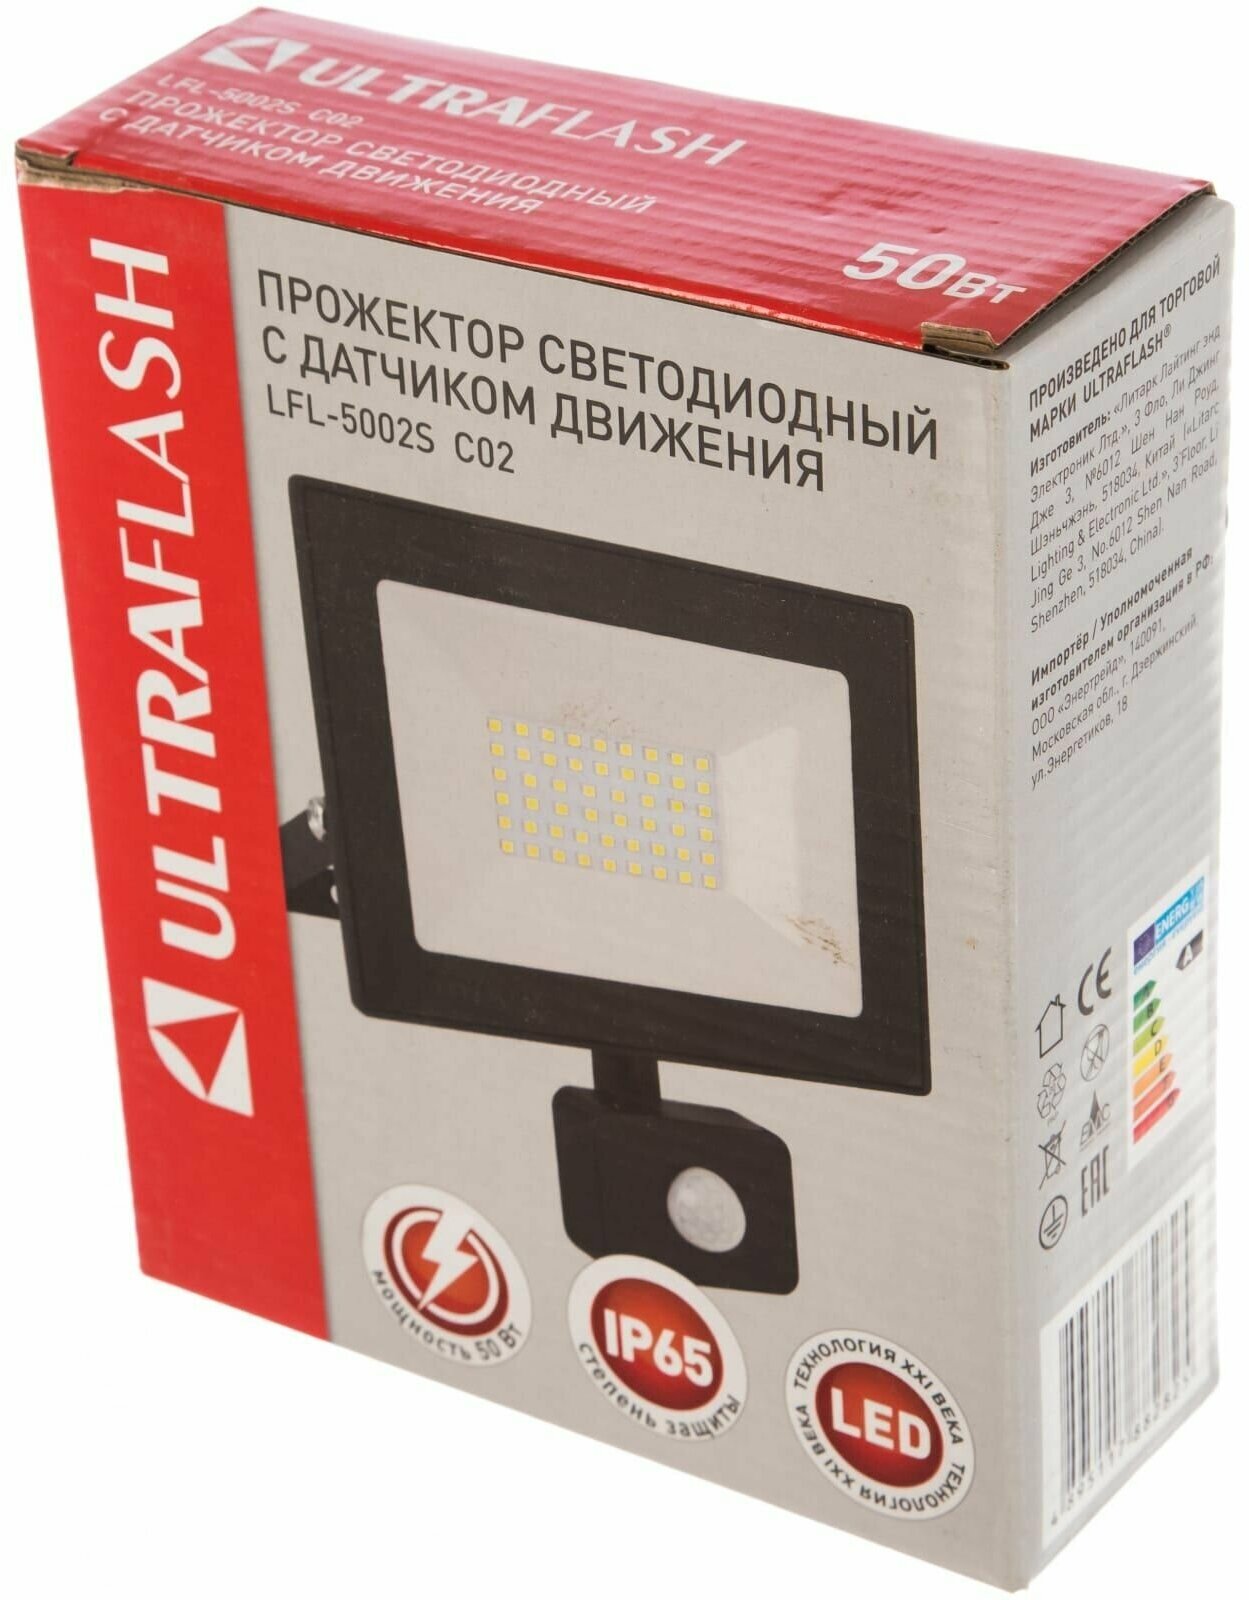 Ultraflash прожектор светодиодн. LFL-5002 C02 50W(3500lm) 6500K 6K черный 134x116x28 (в пленке б/уп) IP65 (арт. 864178) - фотография № 6